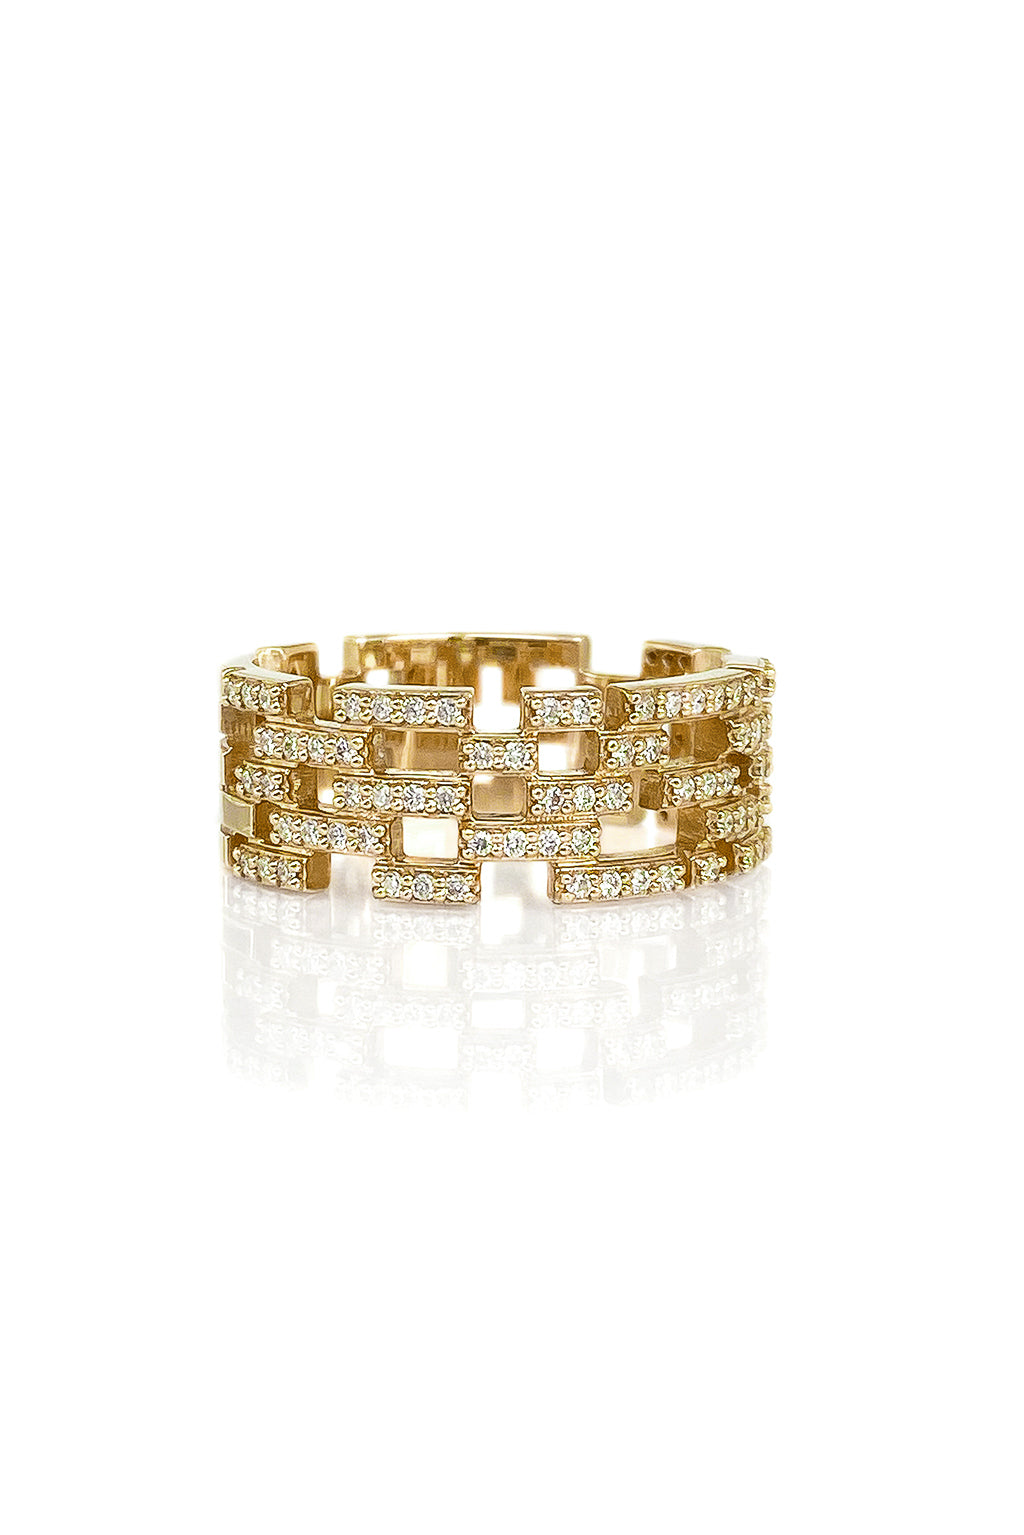 Middle Brick diamonds gold ring